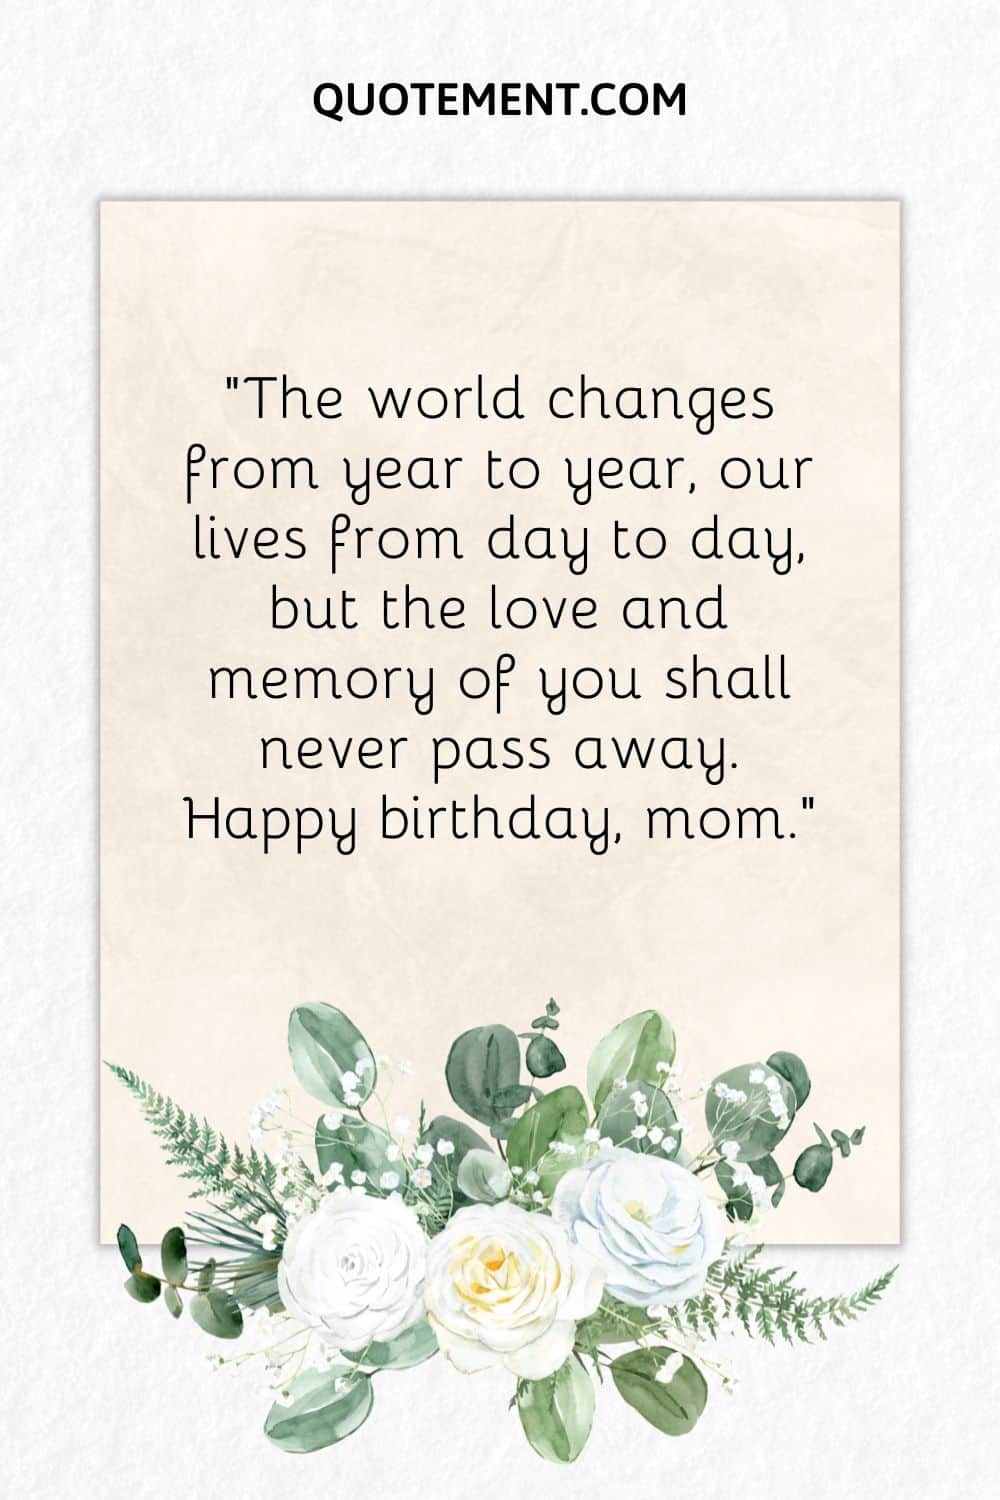 70 Heartfelt Happy Birthday Wishes For My Mom In Heaven